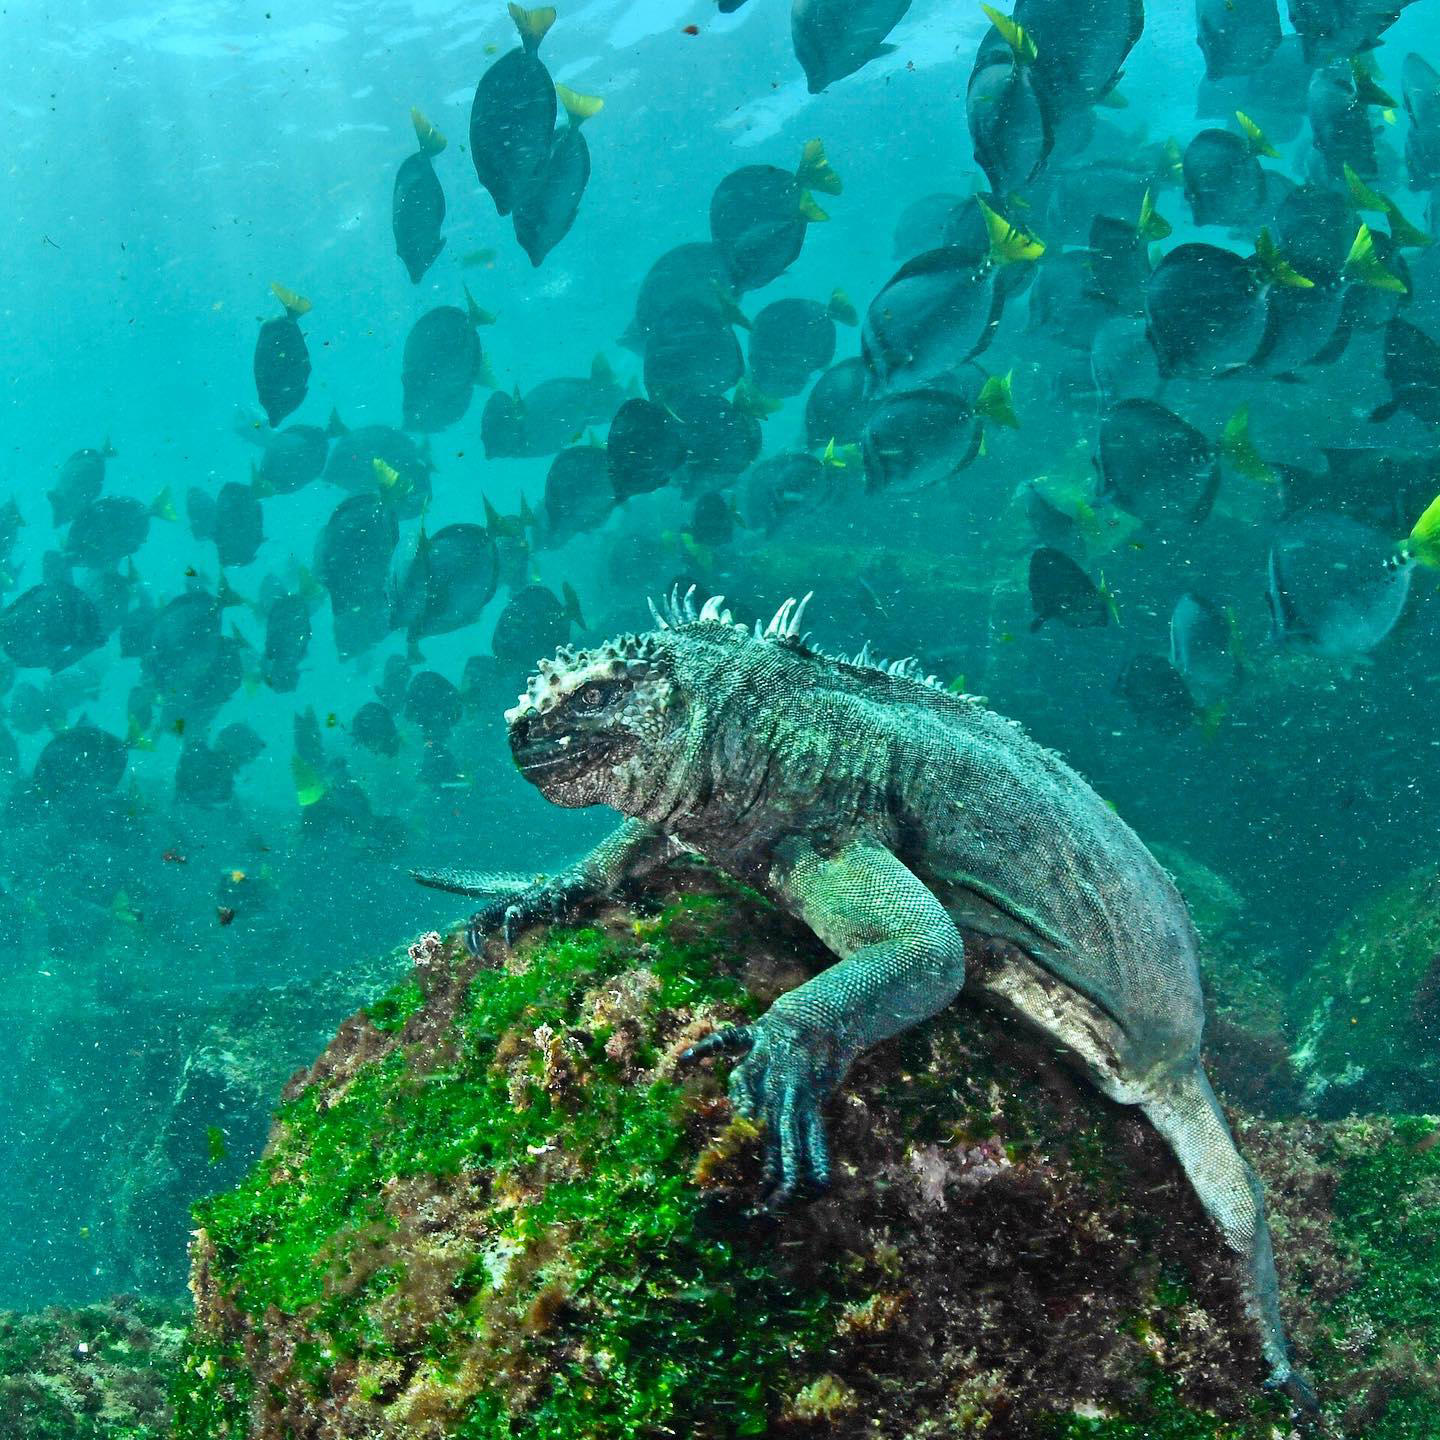 Thomas Peschak - Fantastic conservation news from the Galápagos